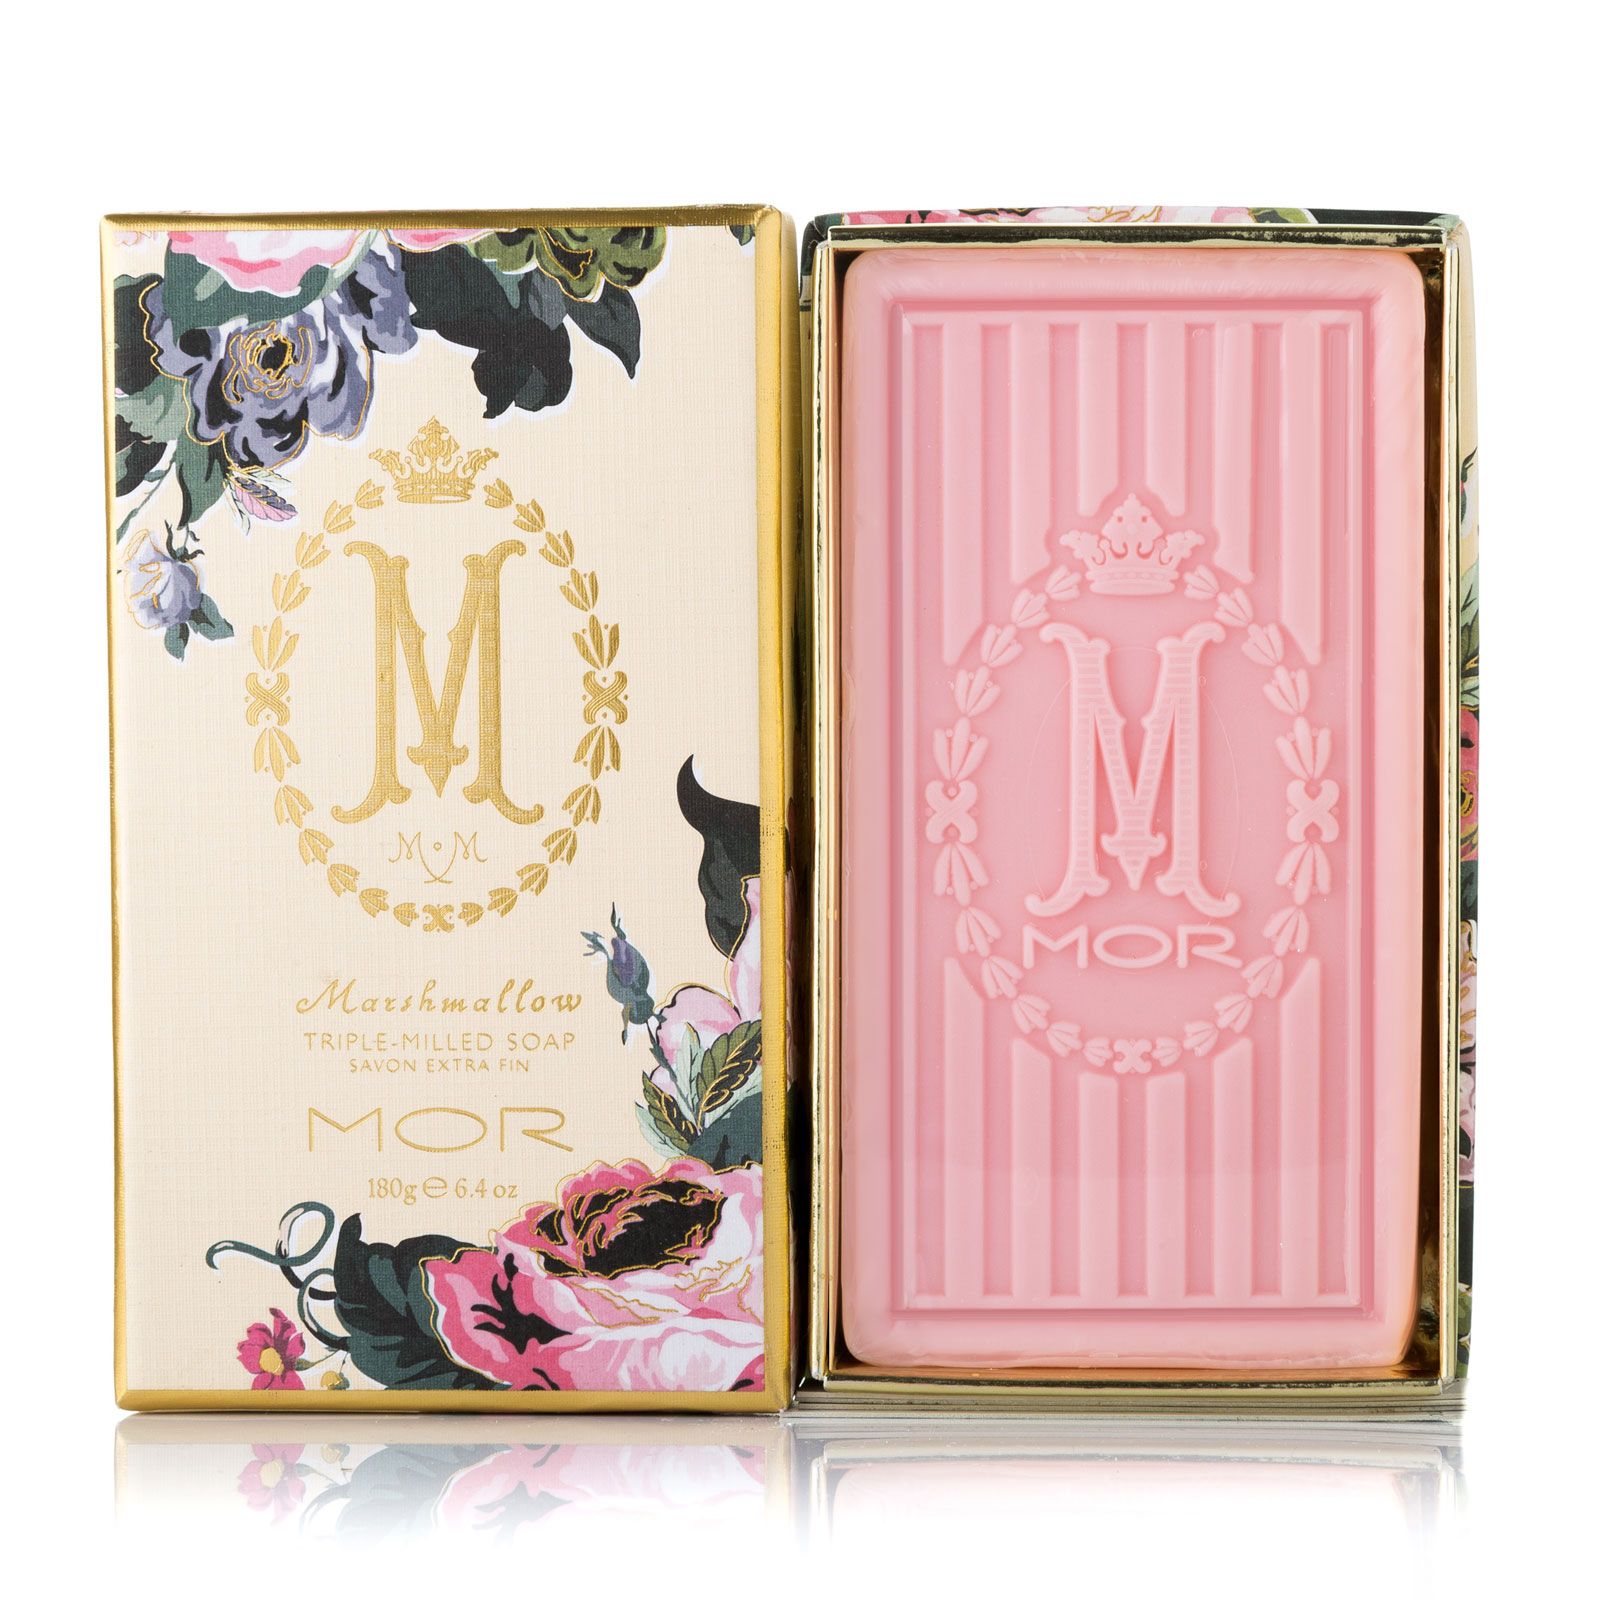 MOR Marshmallow Triple-Milled Soap